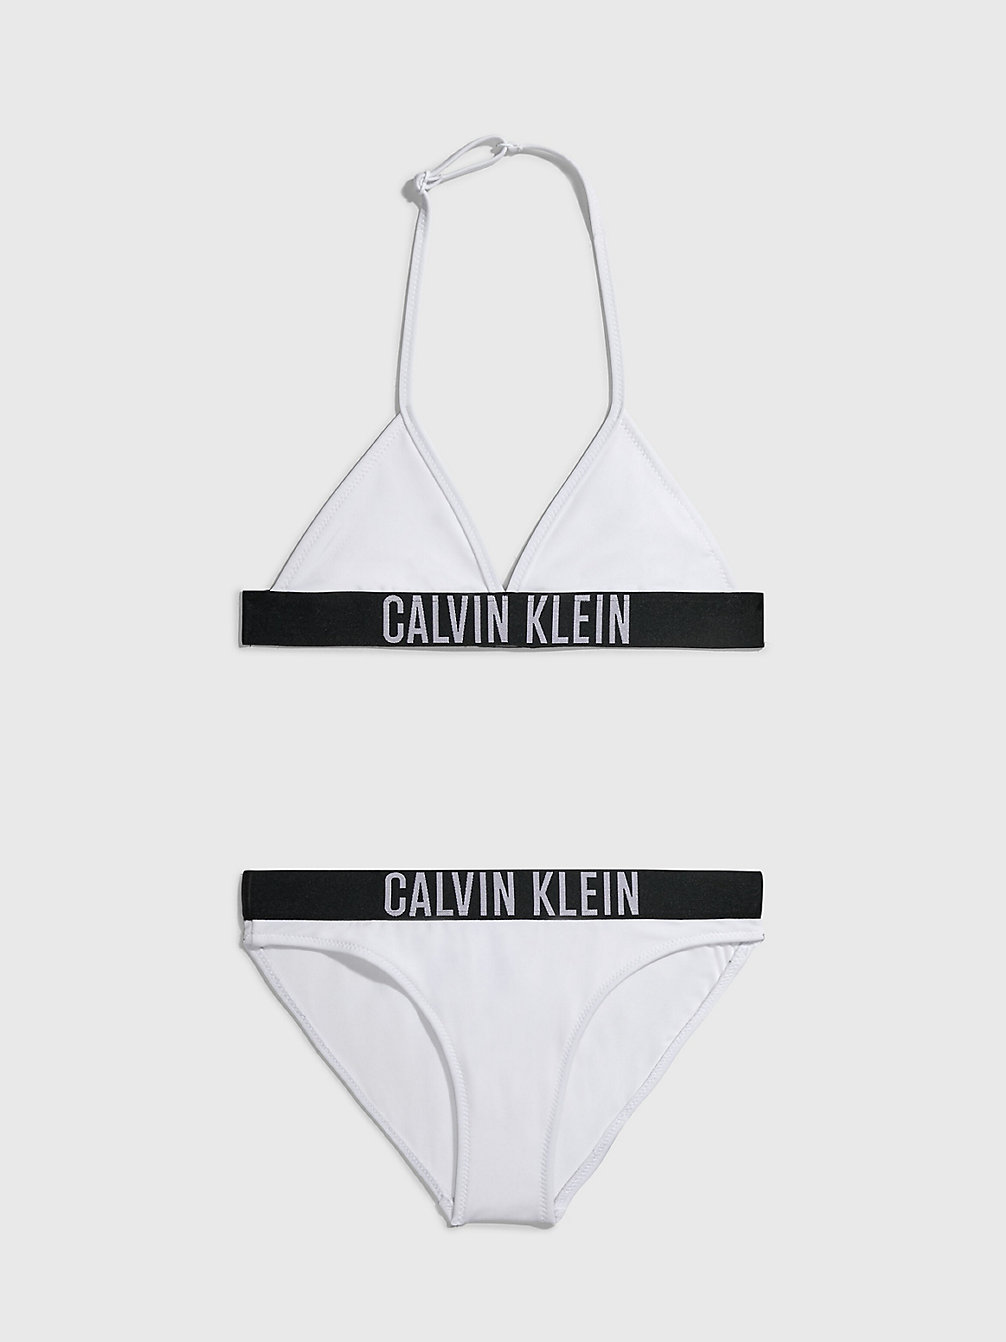 Ensemble Bikini Triangle Pour Fille - Intense Power > PVH CLASSIC WHITE > undefined girls > Calvin Klein